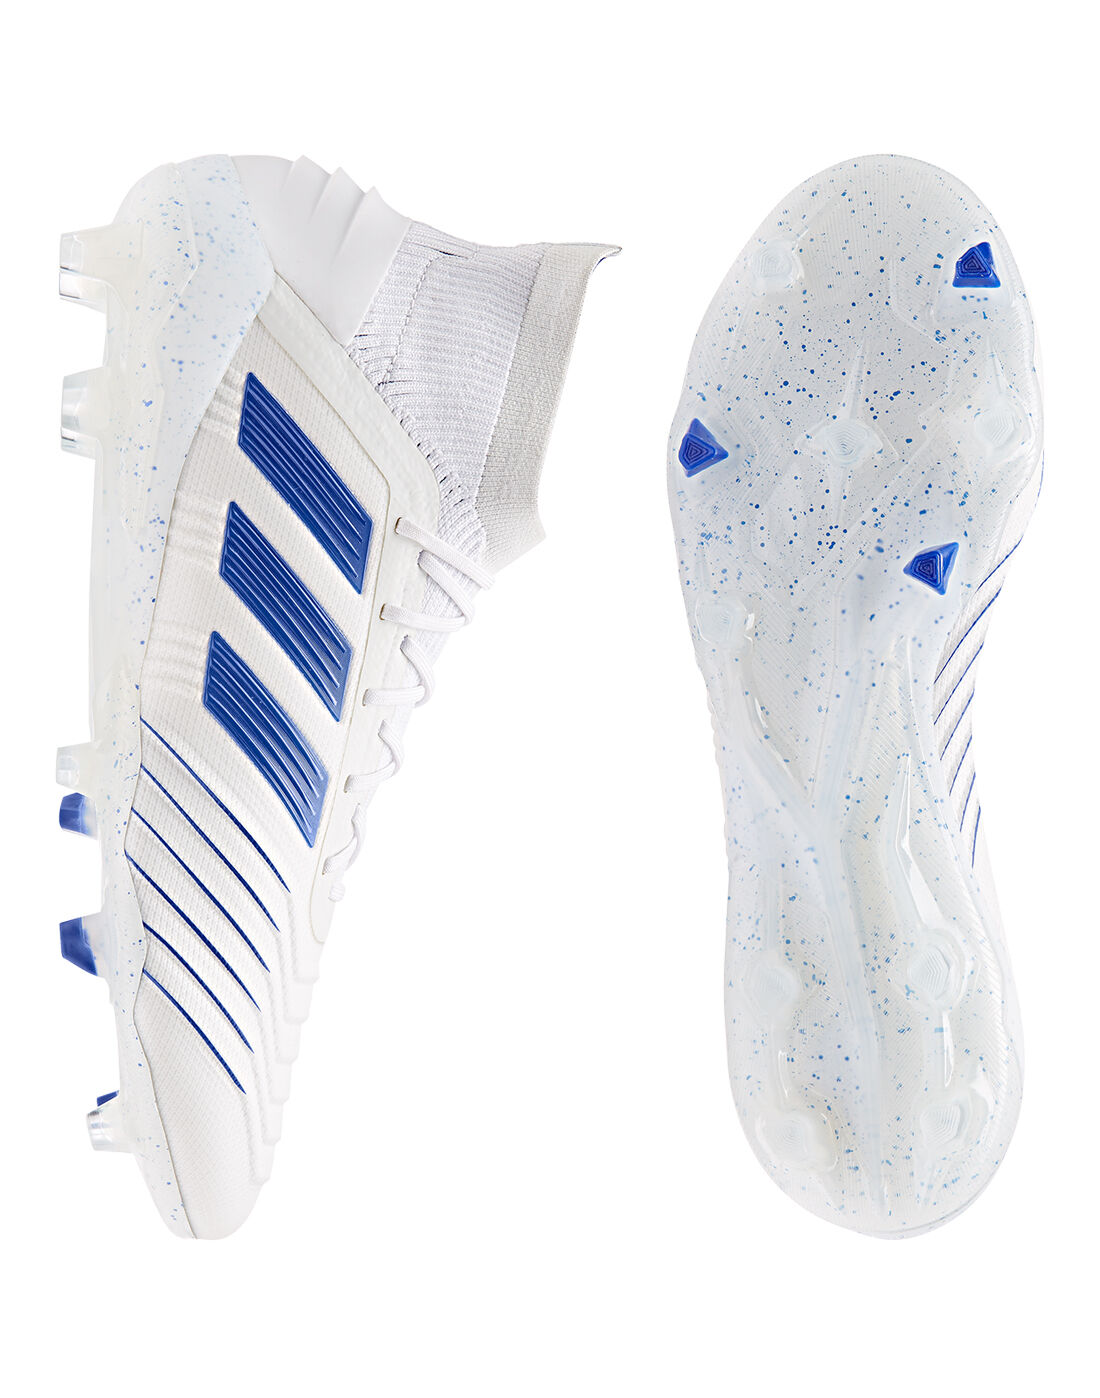 adidas predator 19.1 blue and white